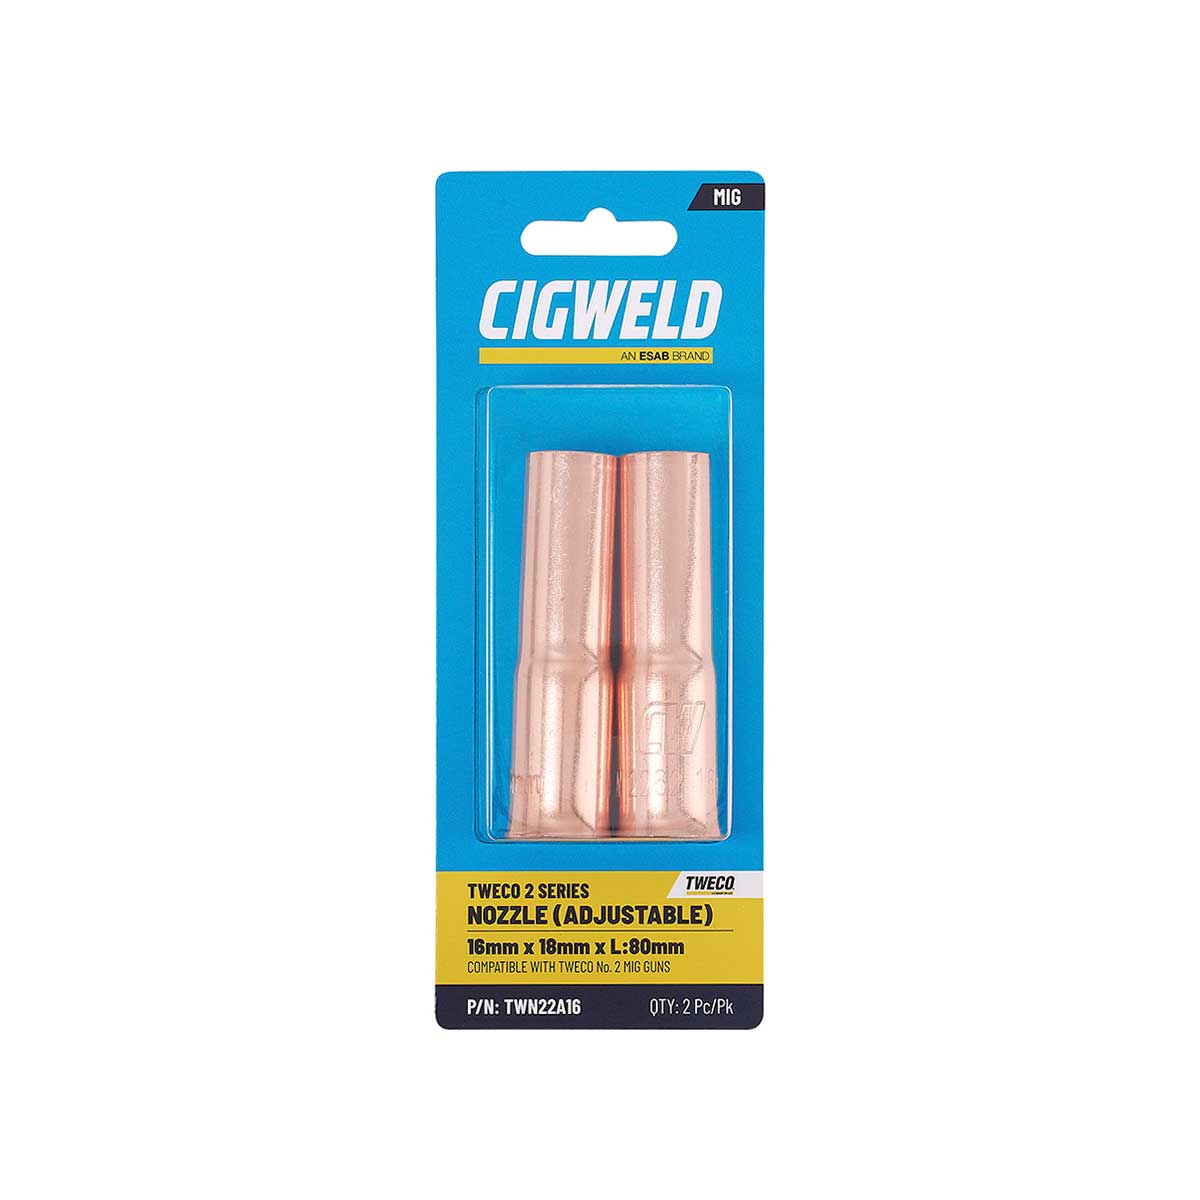 Cigweld Tweco 2 Nozzle Adjustable 16mm